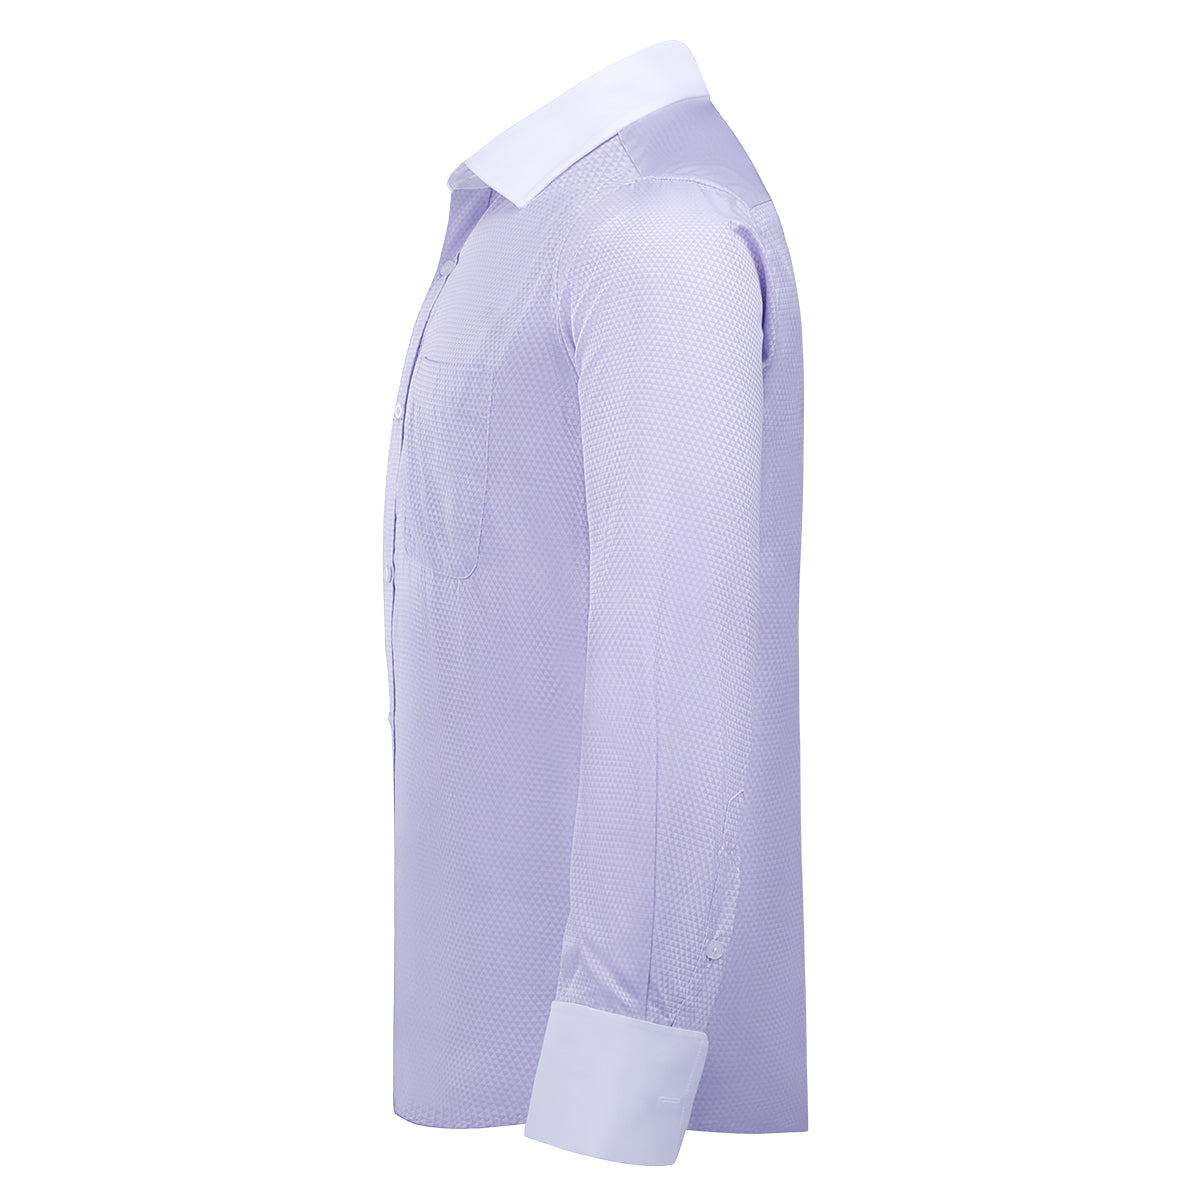 Men's Dress Shirt Slim Fit Button Down Stripe Checked Shirt Light Purple